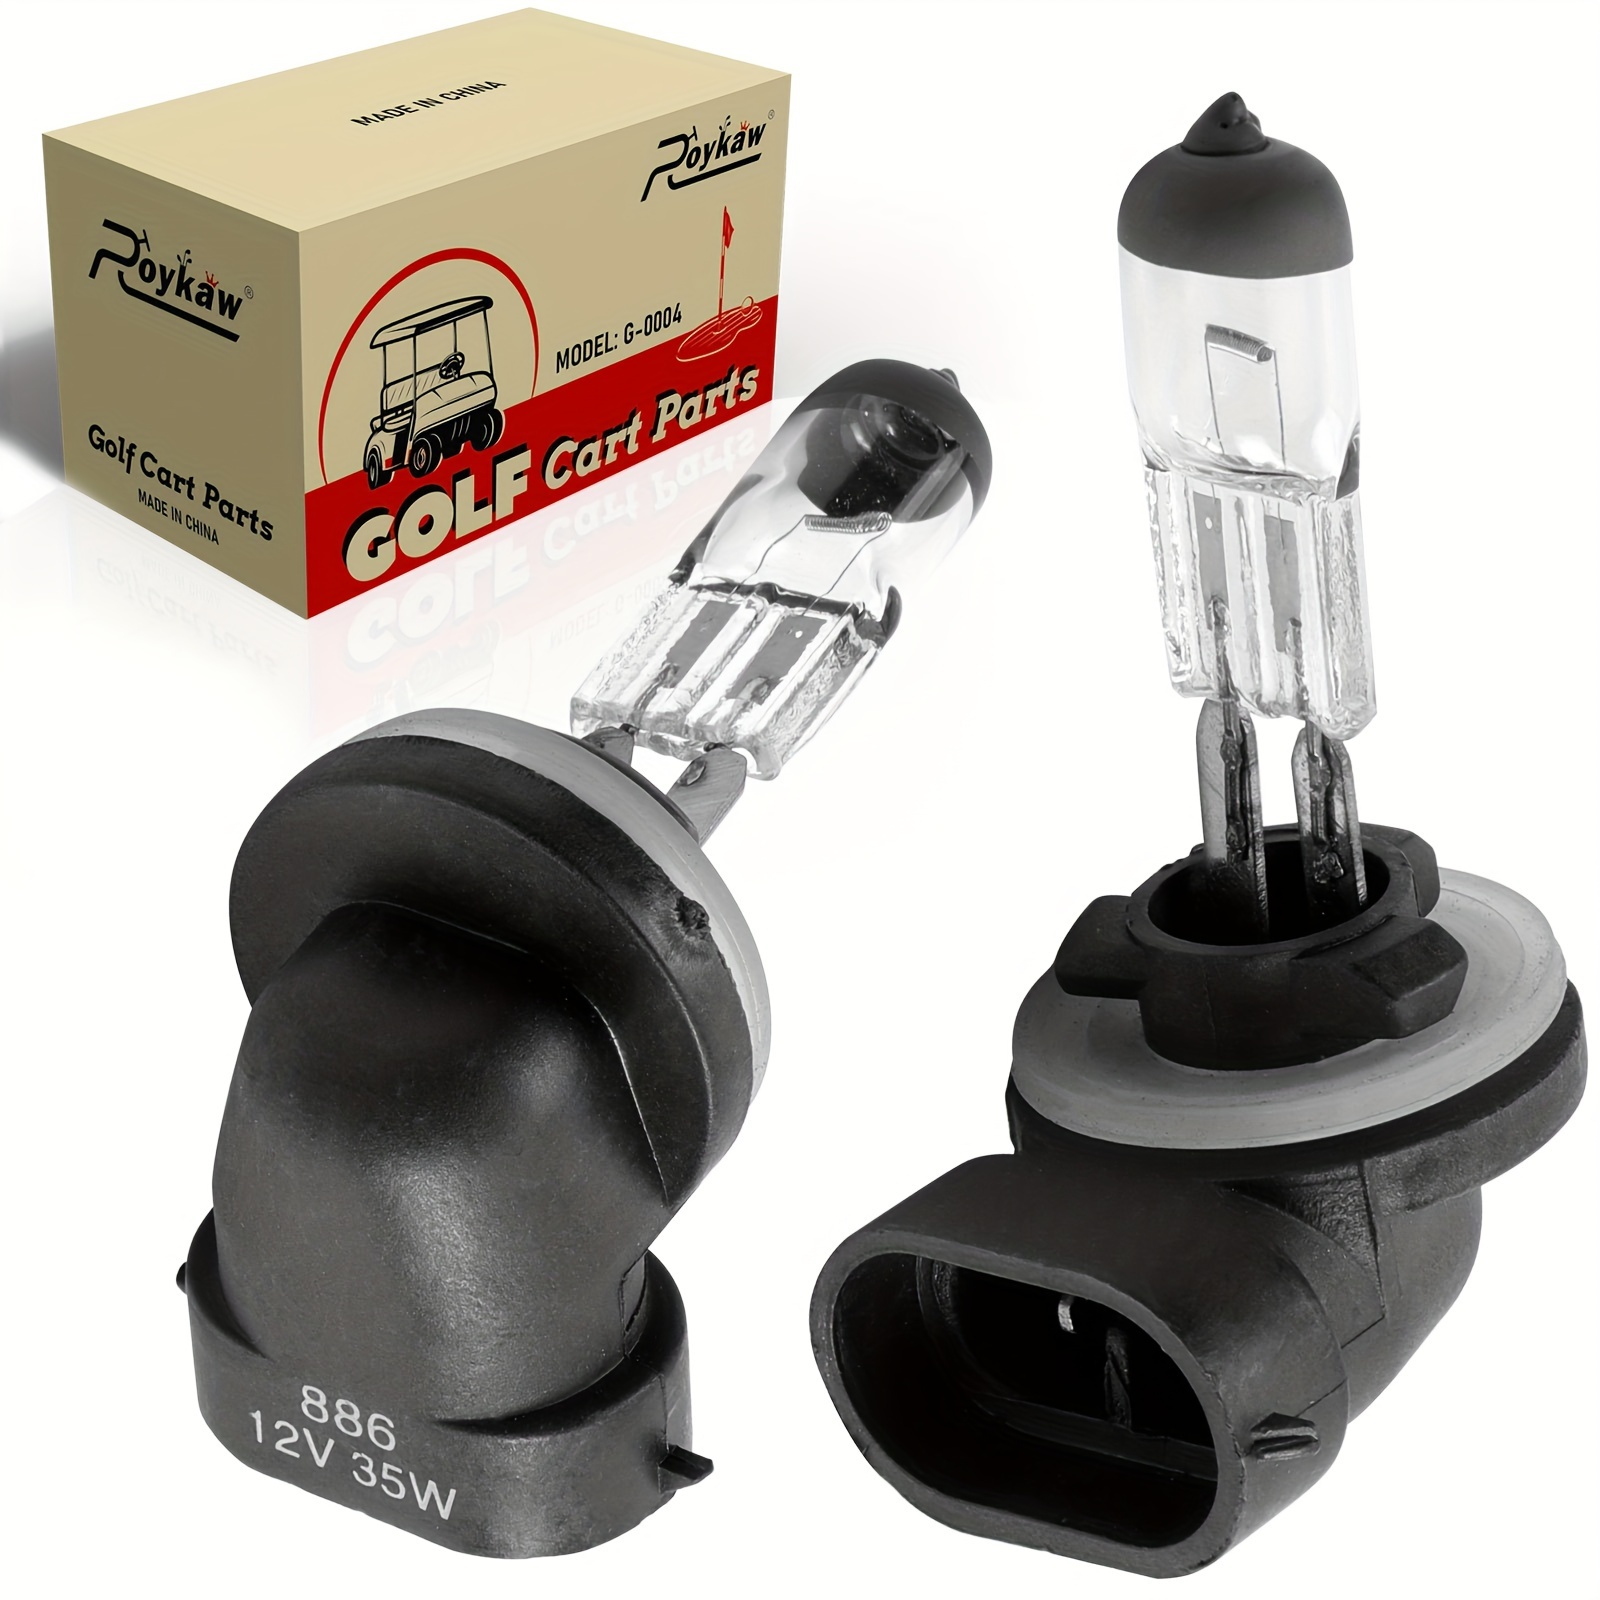 

12v/35 Watt Golf Cart Halogen Headlight Bulb For Ds & And Ezgo Replaces Oem # 101988101, 74004g01